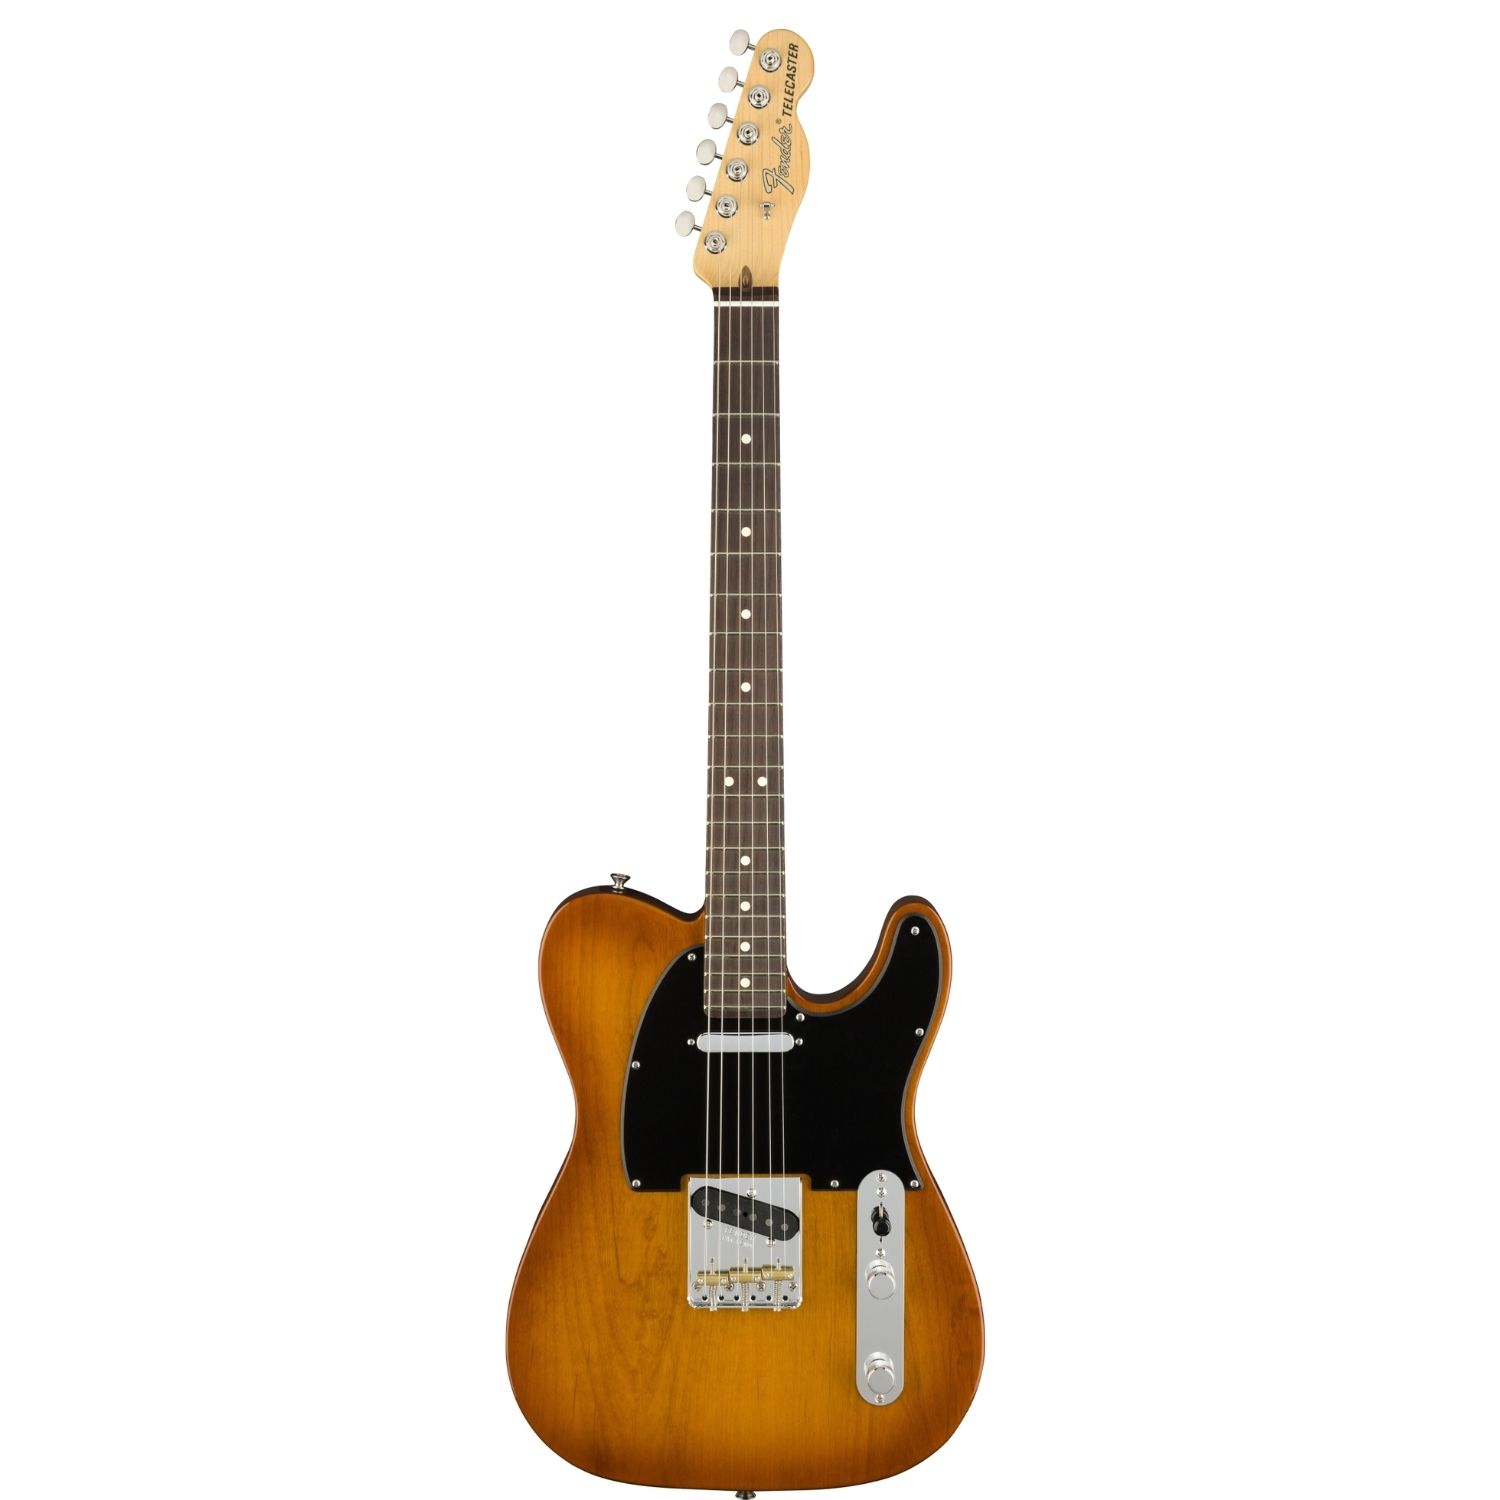 Fender AM Performer Tele, Alder Body, Rosewood Fingerboard online price in India